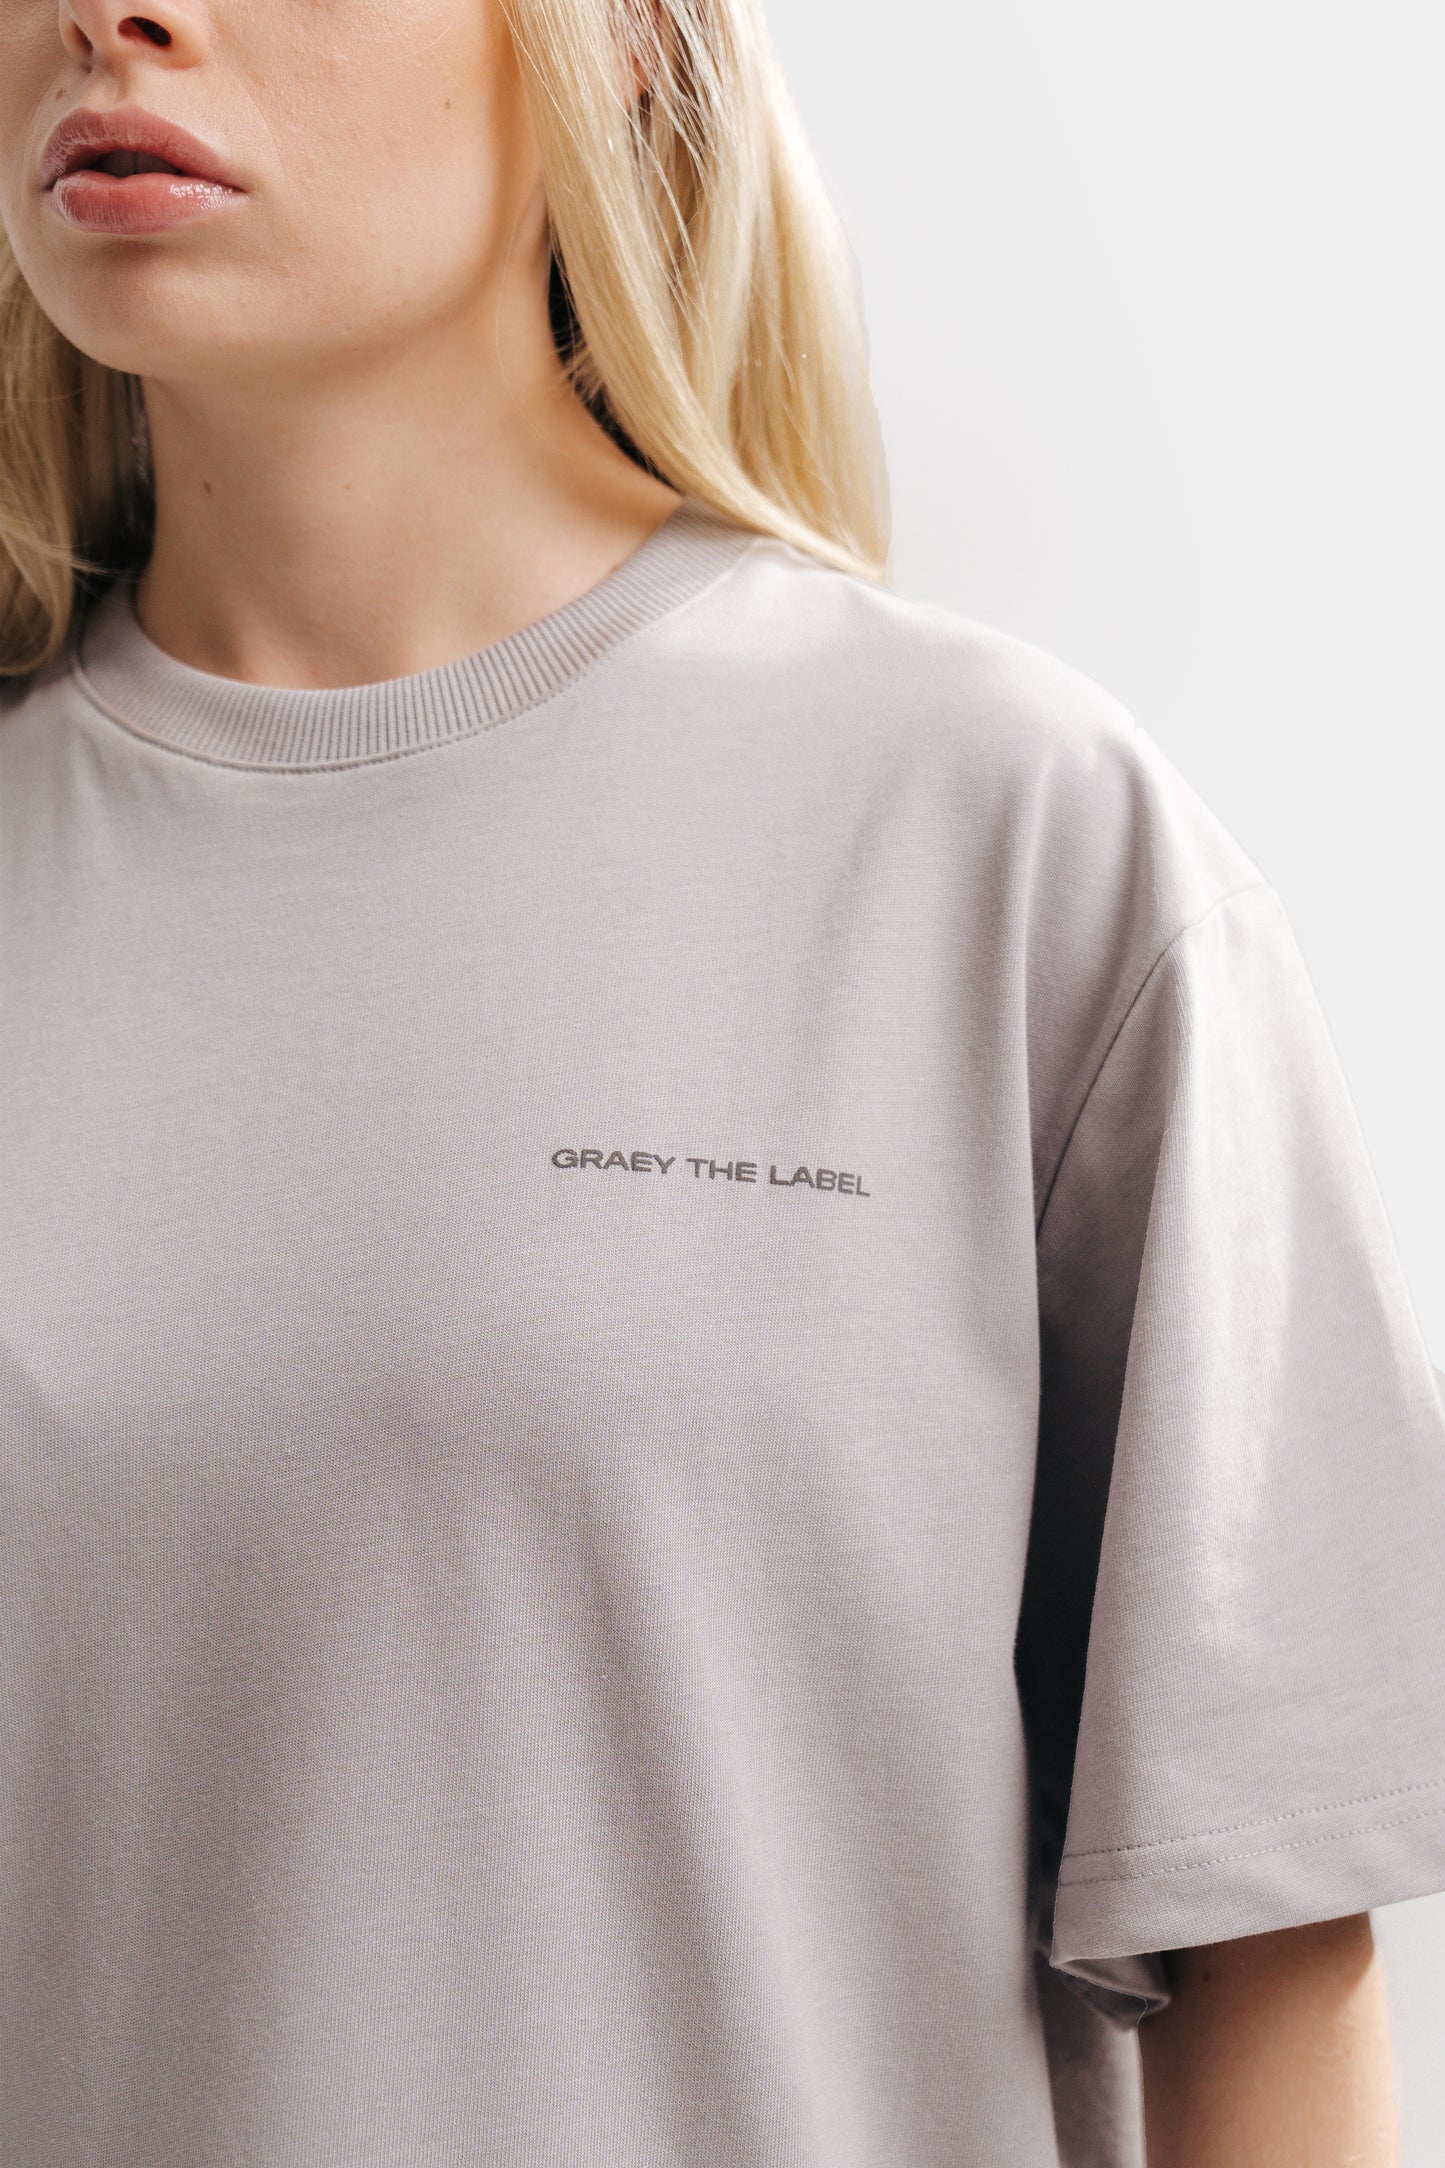 T-Shirt | Stone grey